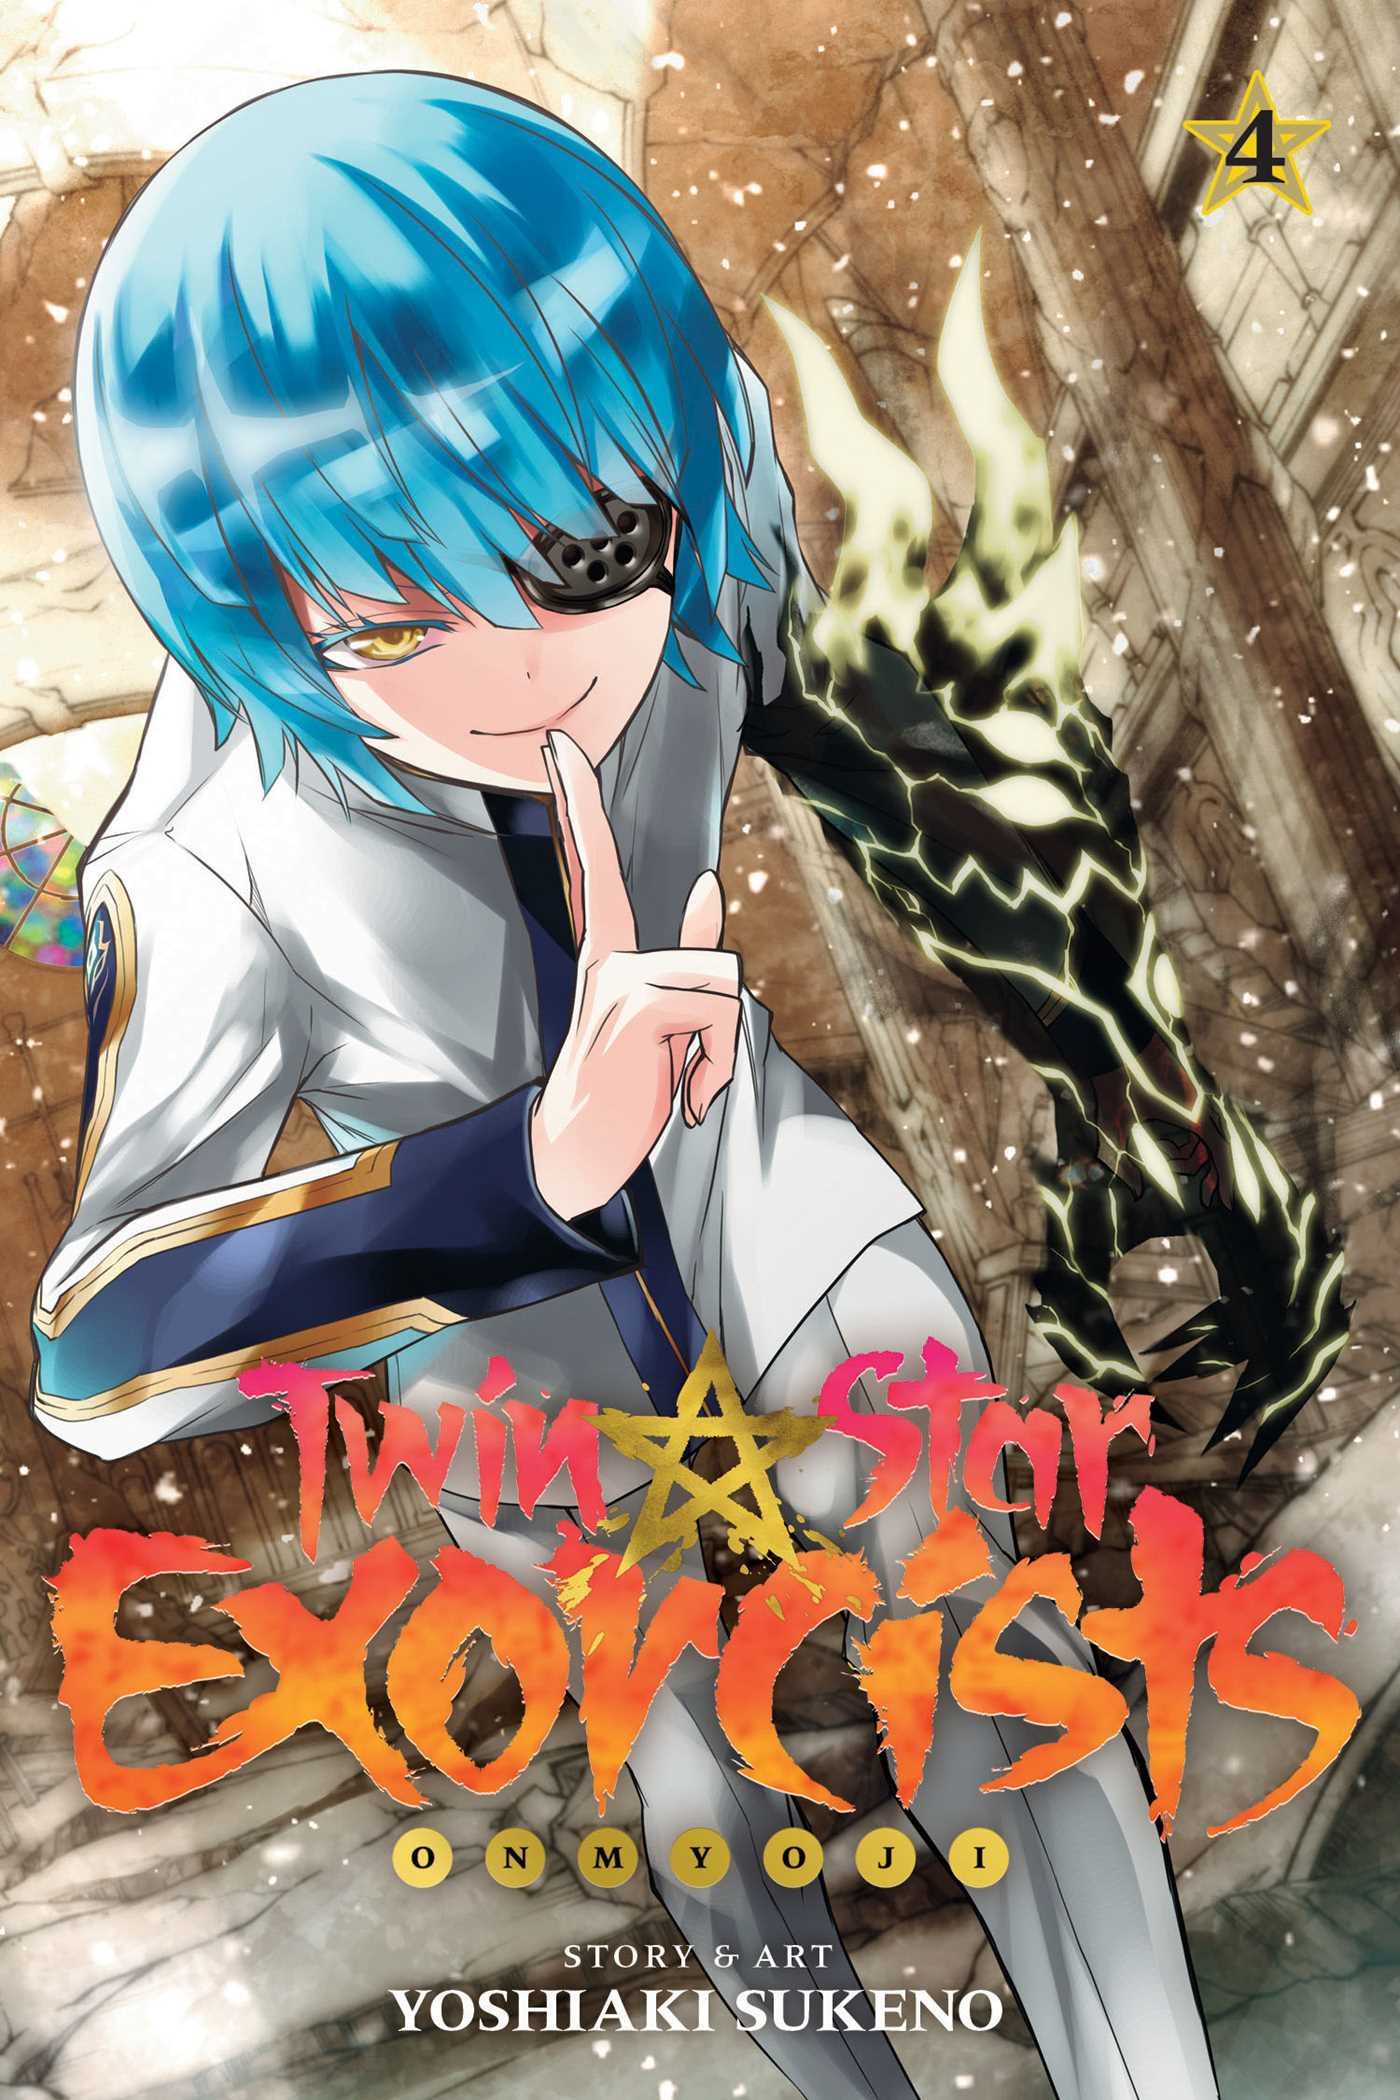 Twin Star Exorcists: Onmyoji - Volume 4 | Yoshiaki Sukeno